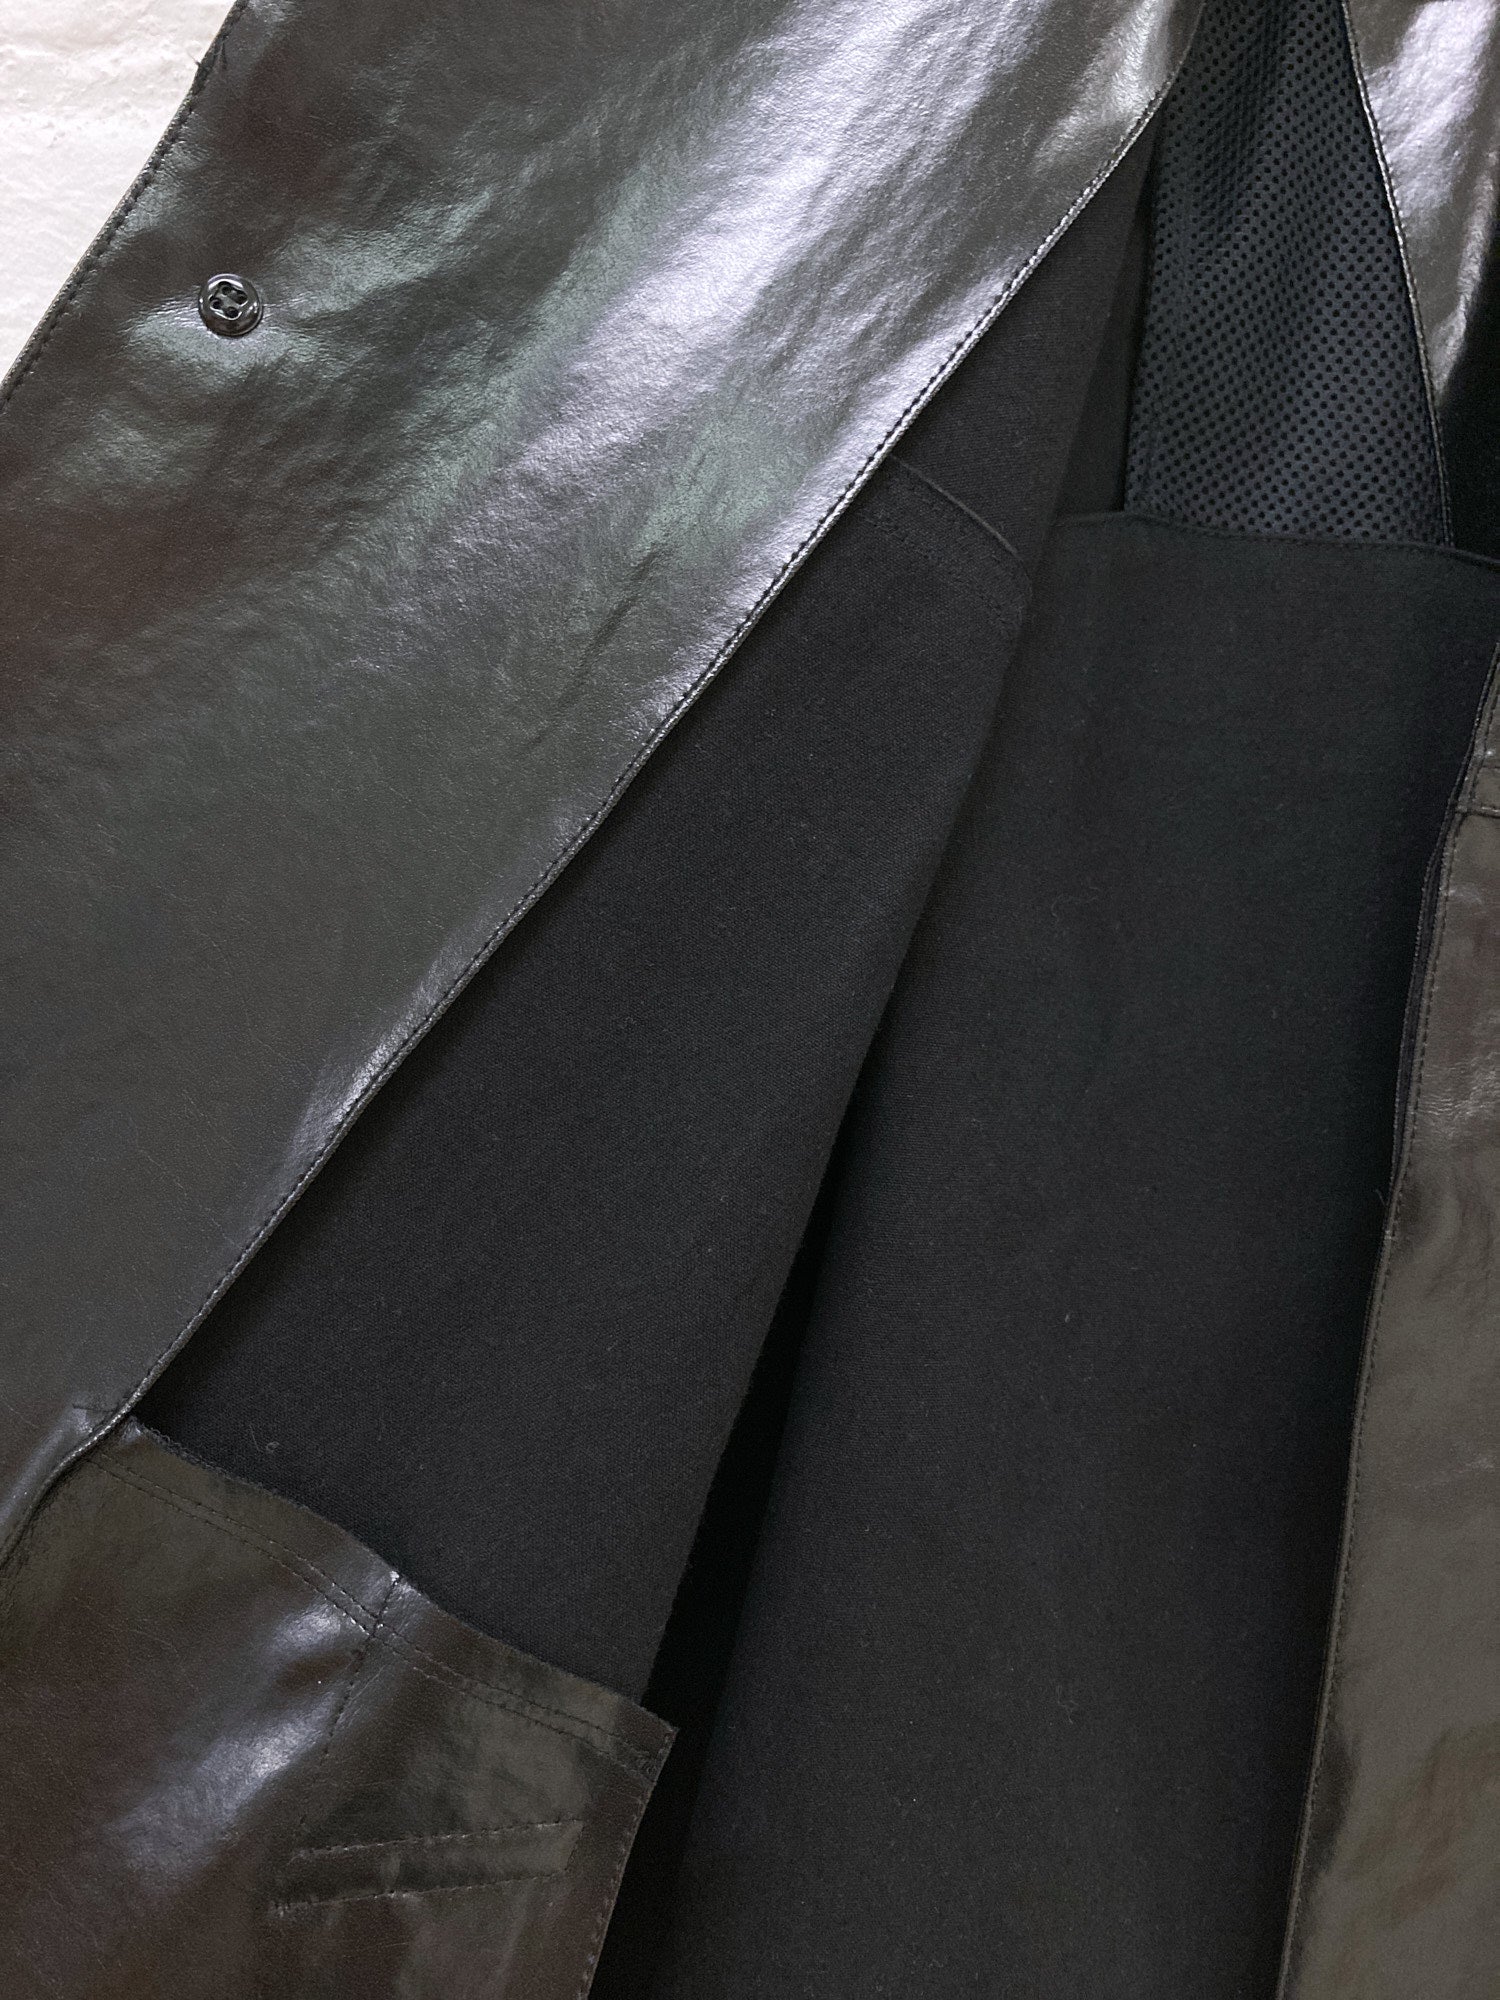 Junya Watanabe Comme des Garcons 1998 black vinyl covered placket coat